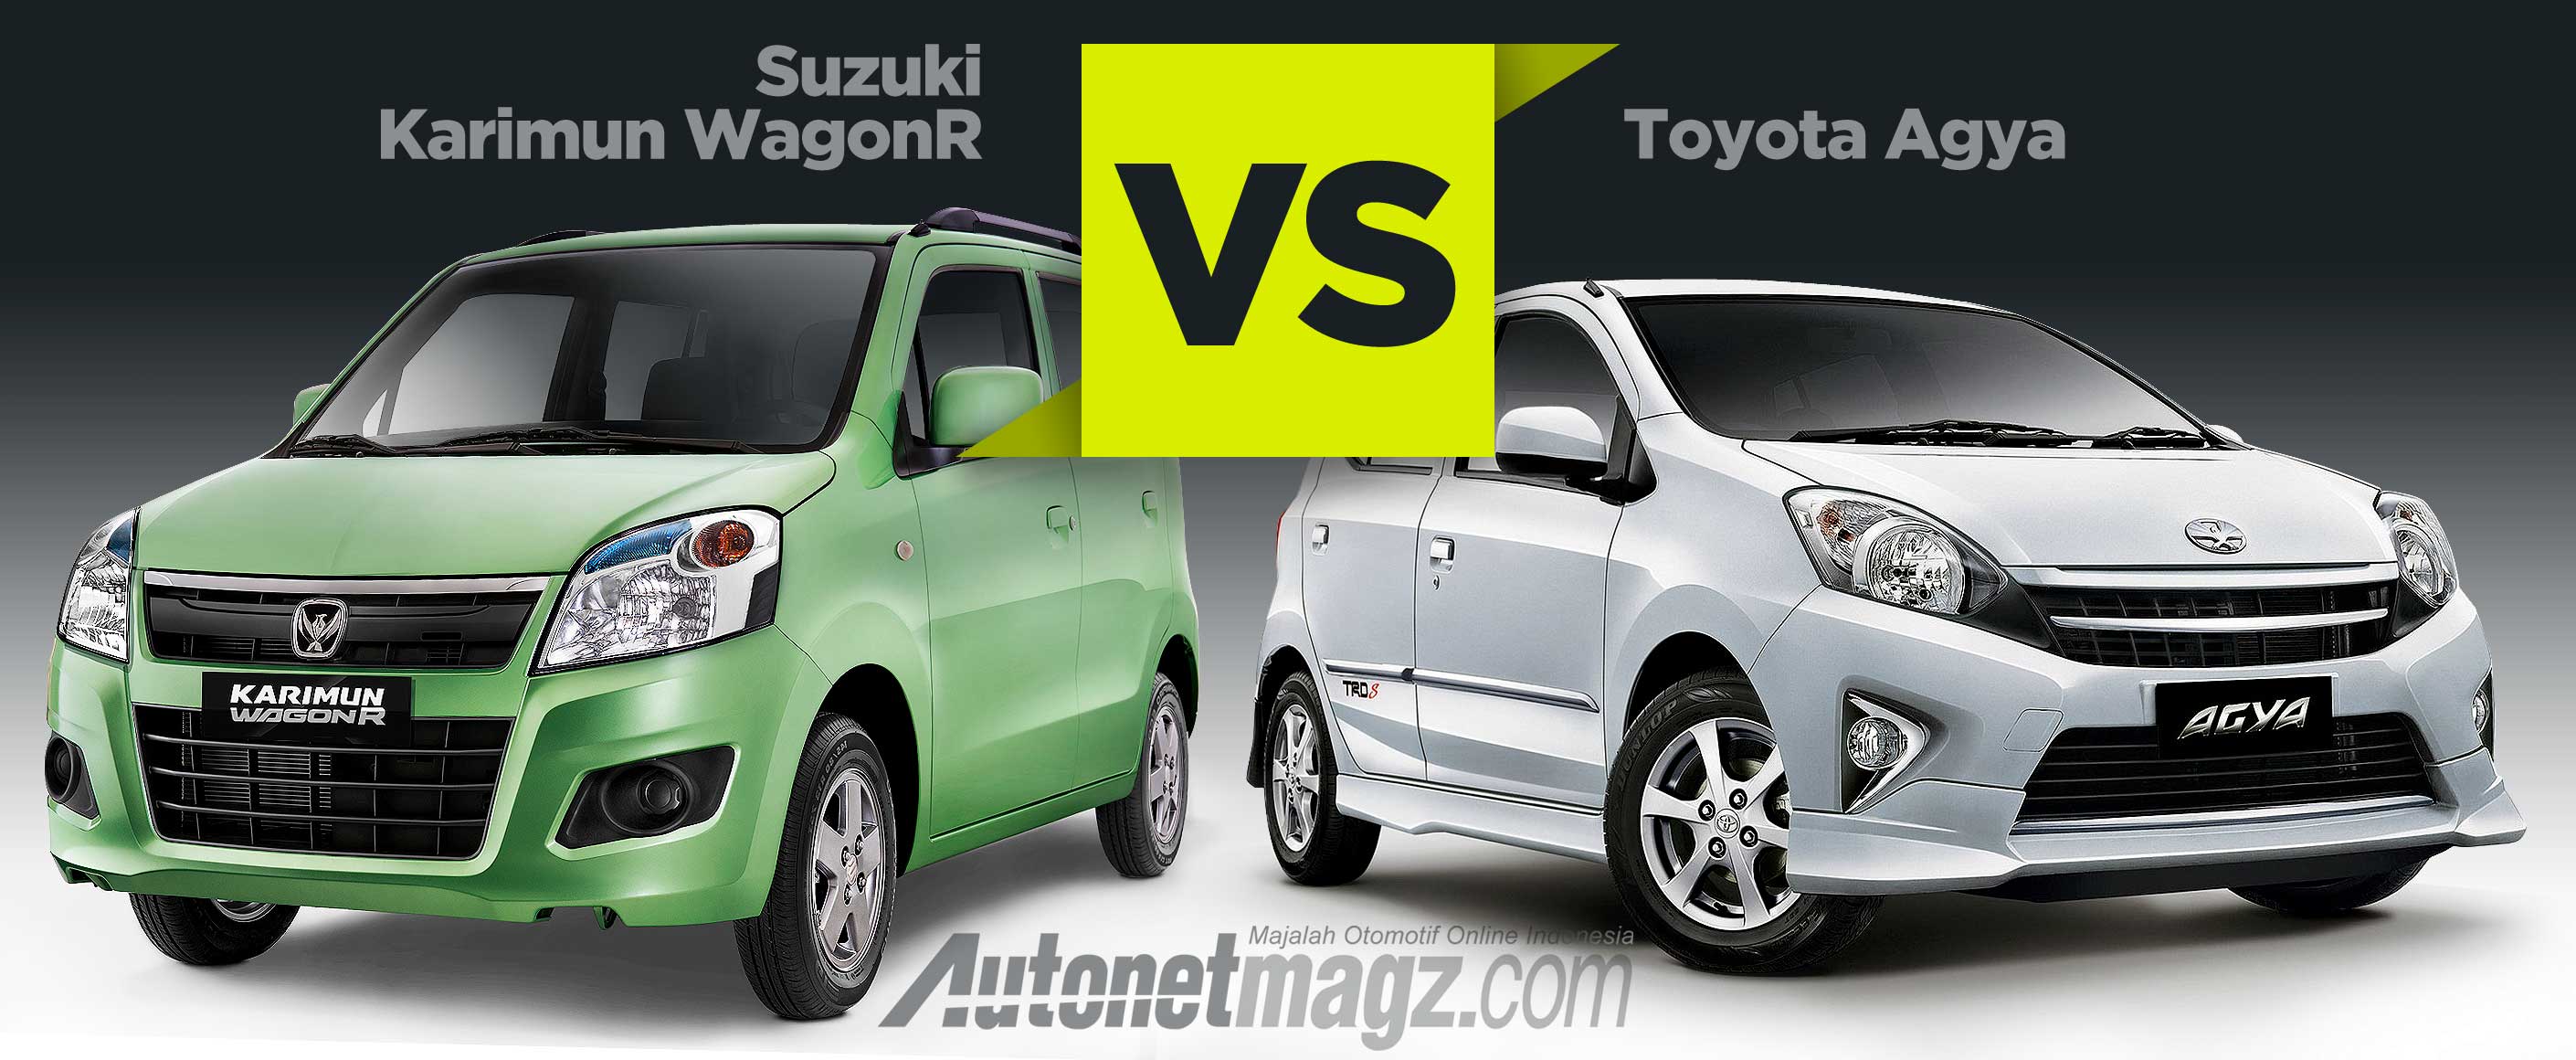 Komparasi, Komparasi perbandingan mobil LCGC Suzuki Karimun Wagon R vs Toyota Agya: Komparasi Perbandingan Suzuki Karimun Wagon R vs Toyota Agya